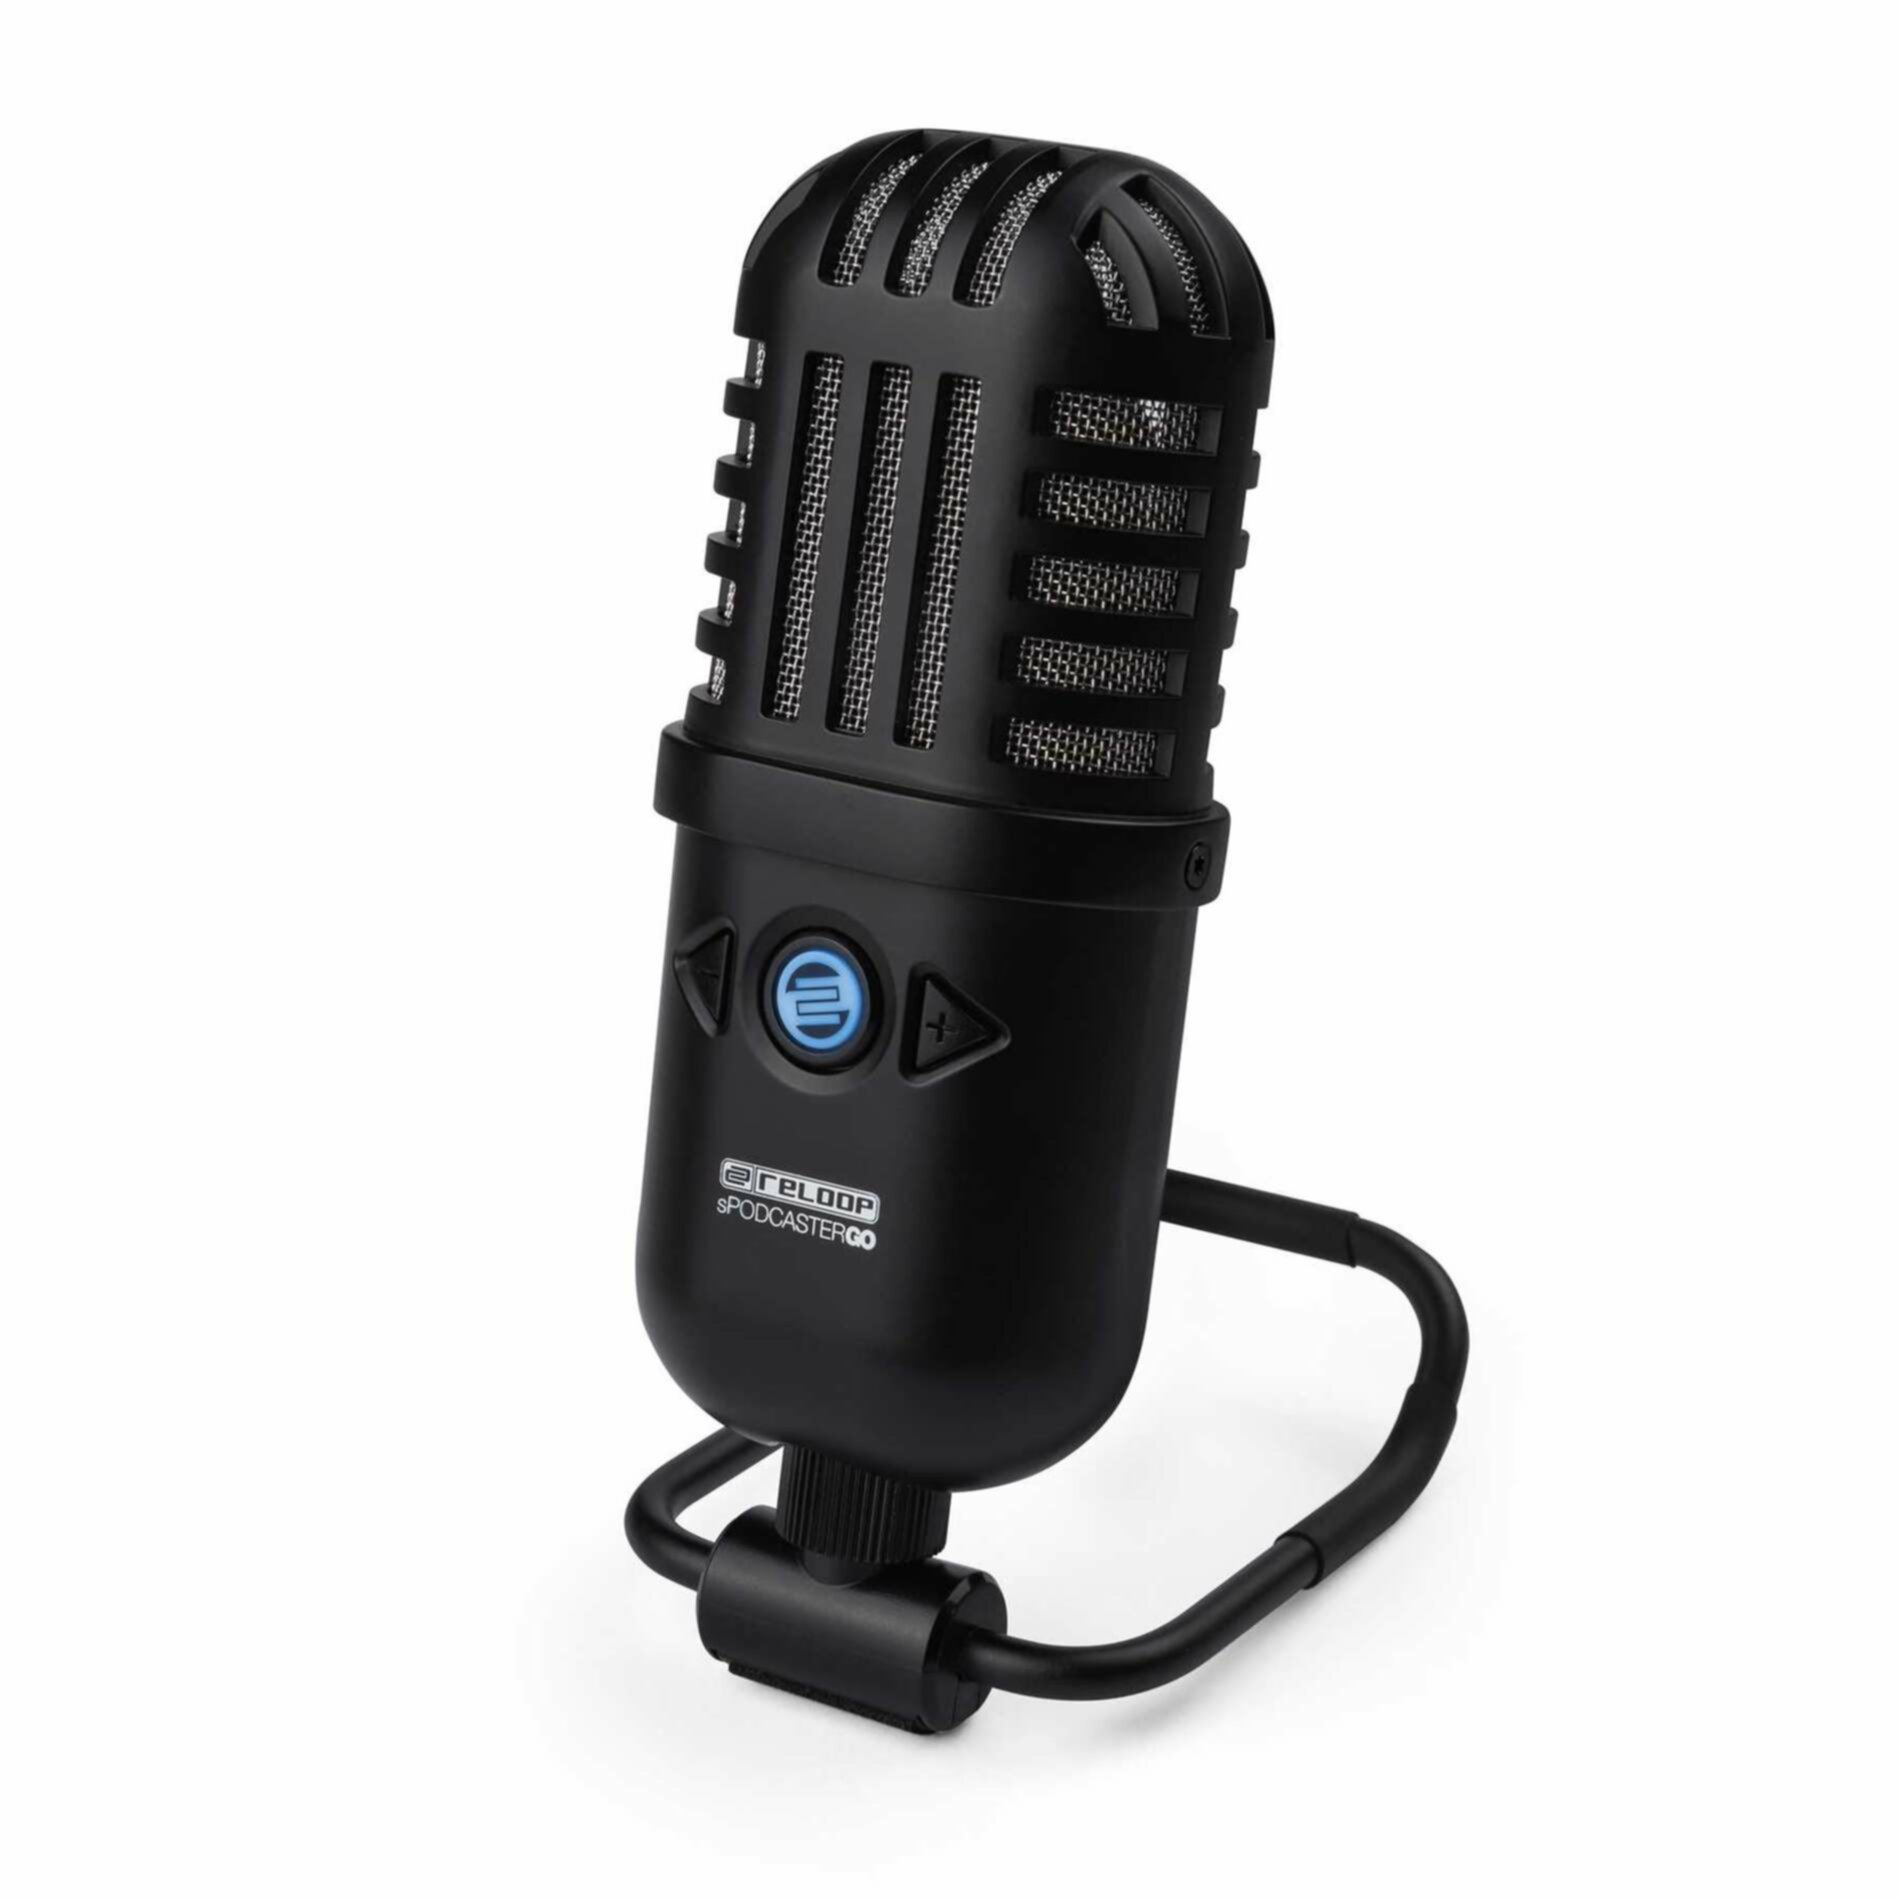 RELOOP SPODCASTER GO Micro USB Podcast - 69,98€ - La musique au